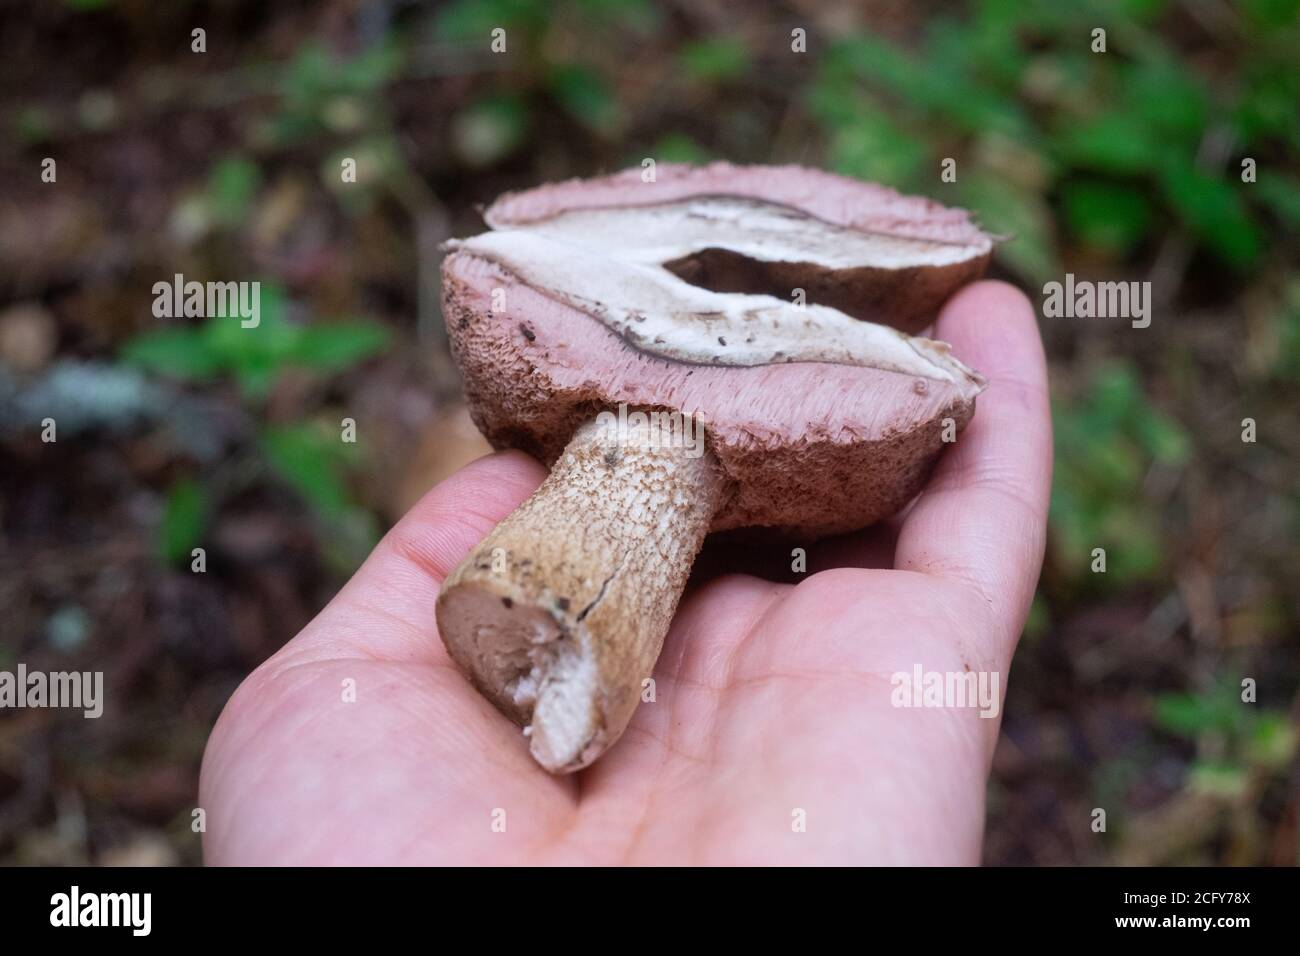 The uneatable bitter bolete mushroom Tylopilus felleus Stock Photo